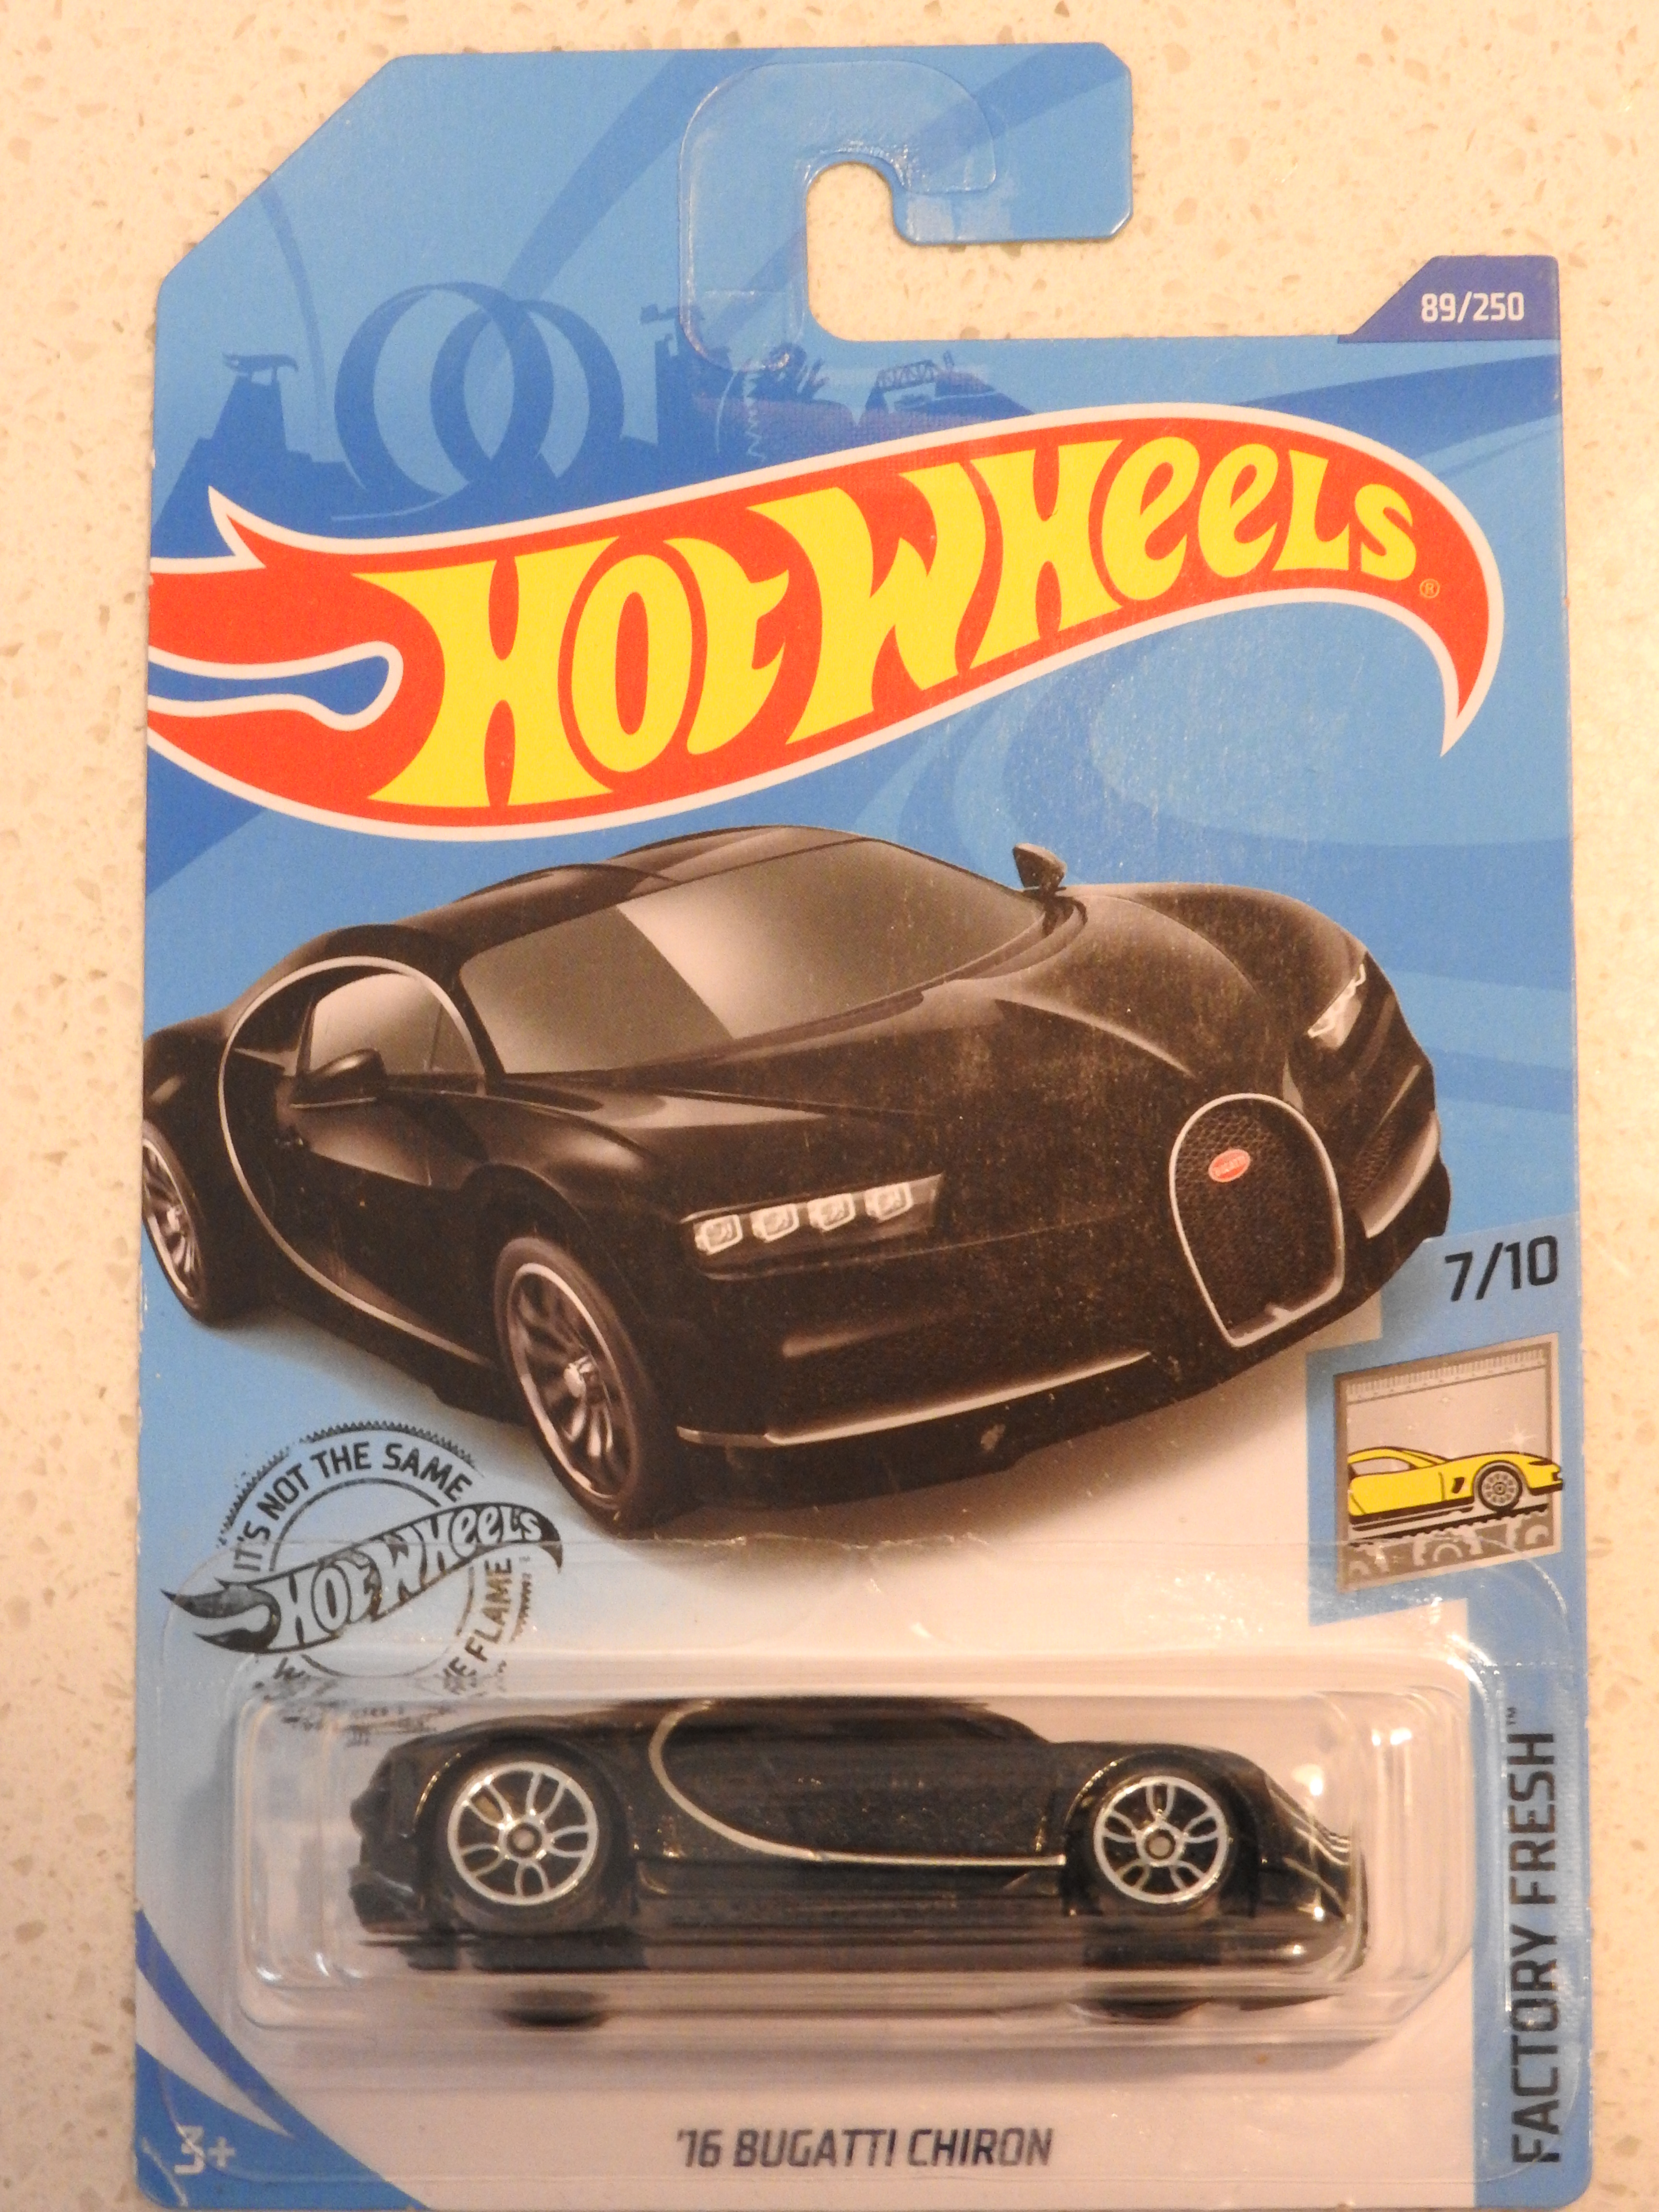 Metalflake Black 16 Bugatti Chiron J5 GHC02 Hot Wheels 2020 Factory Fresh 7/10